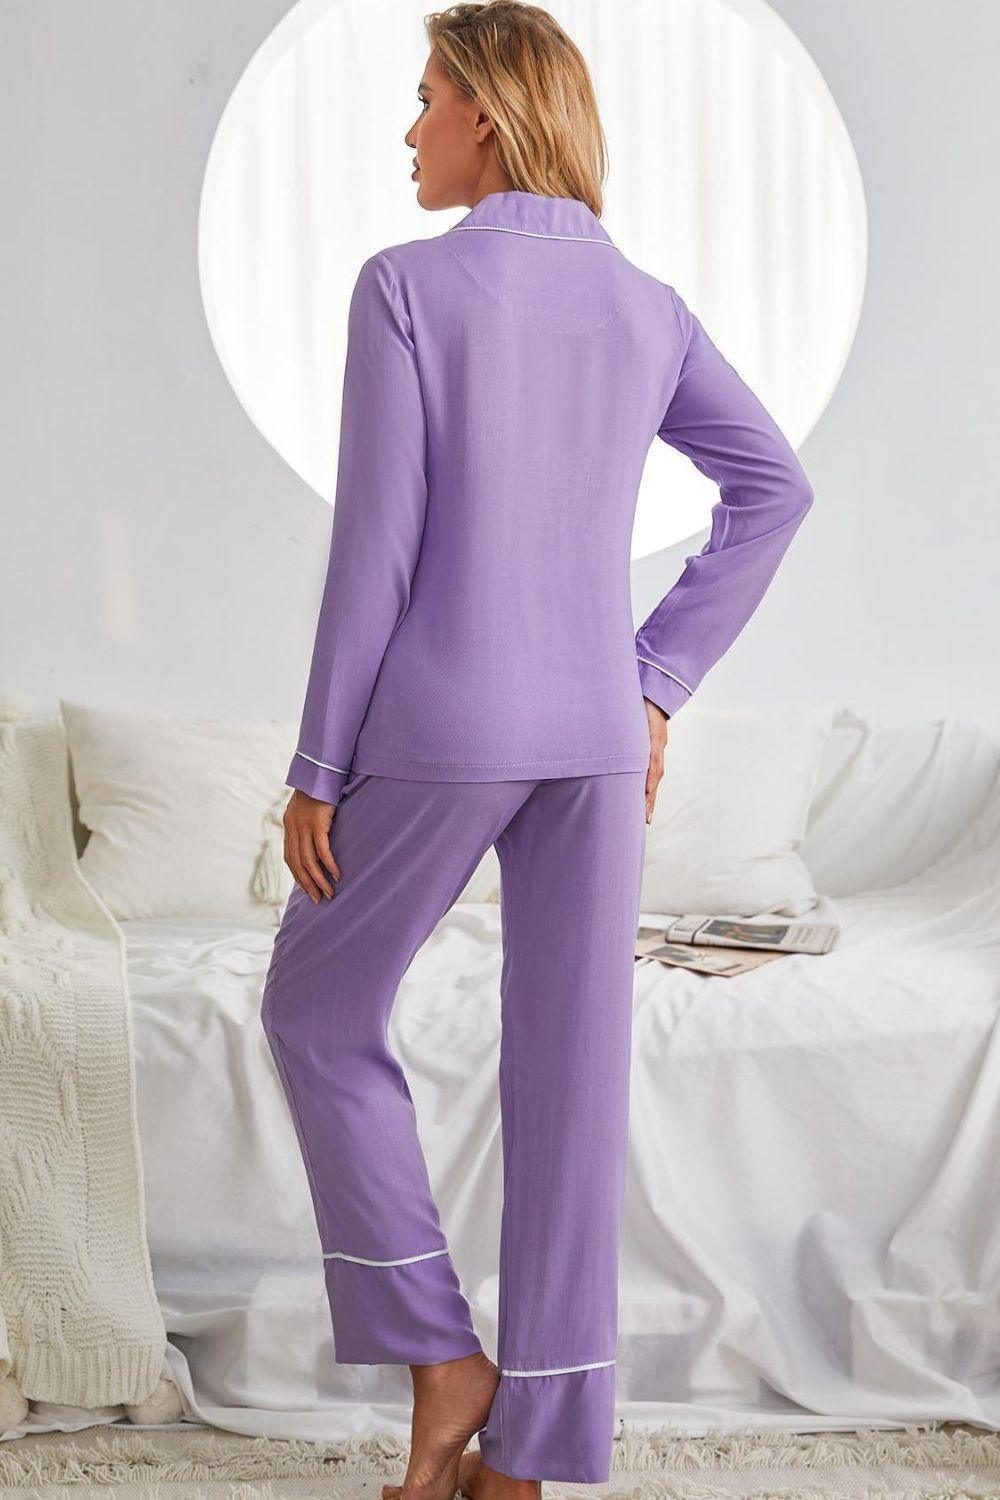 Contrast Lapel Collar Shirt and Pants Pajama Set with Pockets - Lab Fashion, Home & Health